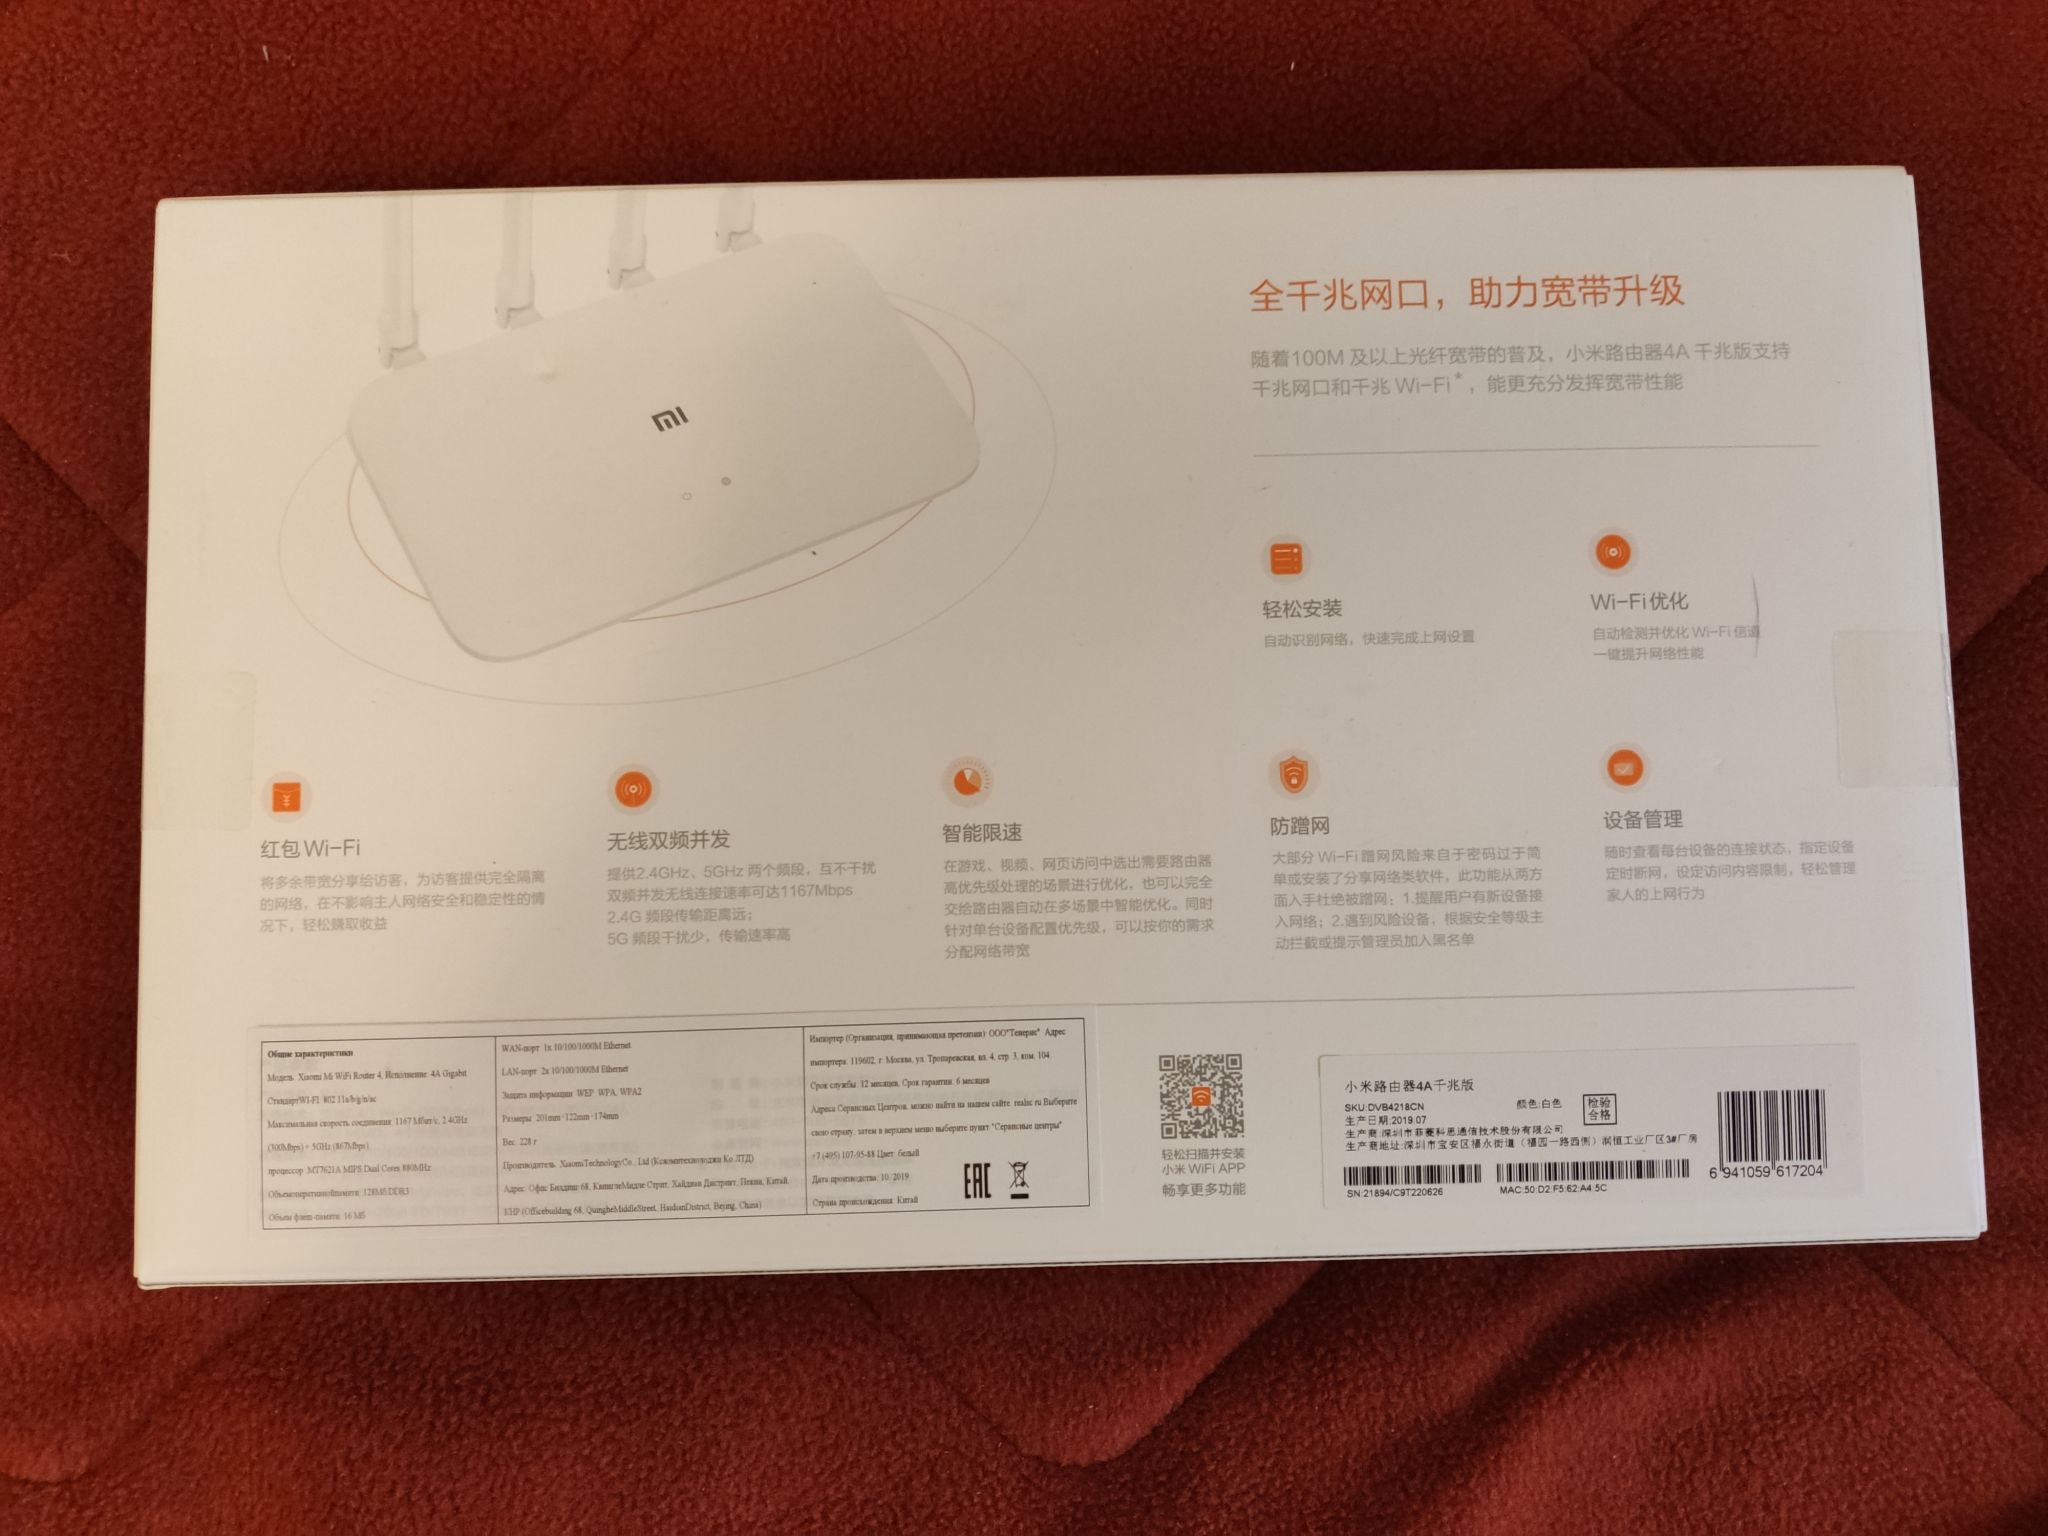 Mi wifi router 4a gigabit. Wi-Fi роутер 4a Gigabit Edition. Xiaomi 4a роутер. Роутер Xiaomi 4a Gigabit. Xiaomi mi WIFI Router 4a Gigabit Edition.